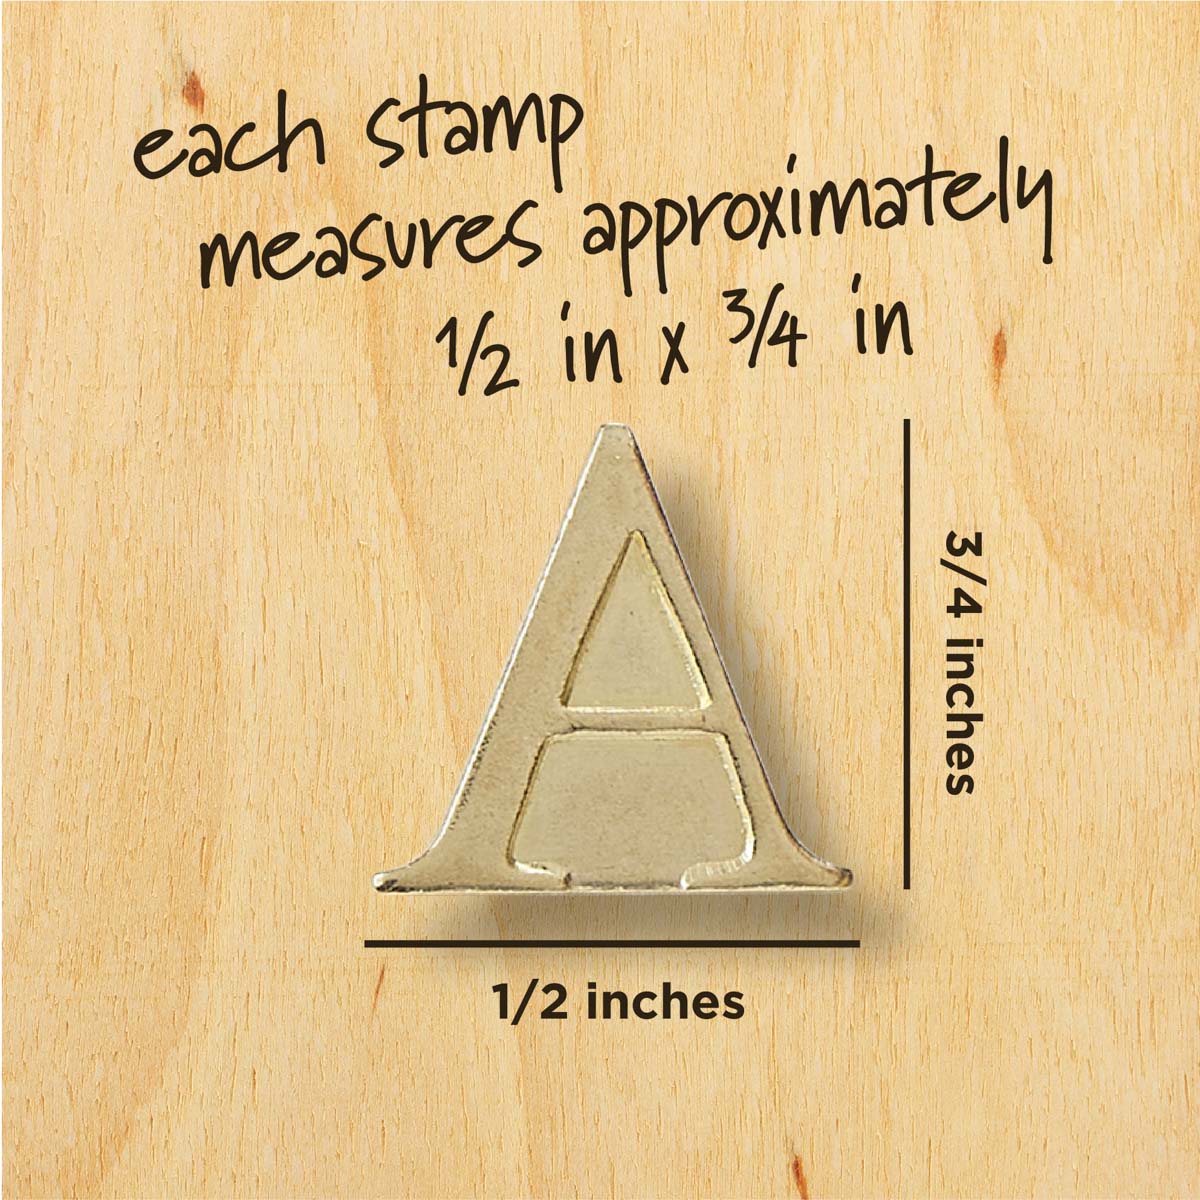 Wood Burning Alphabet Stamp Set